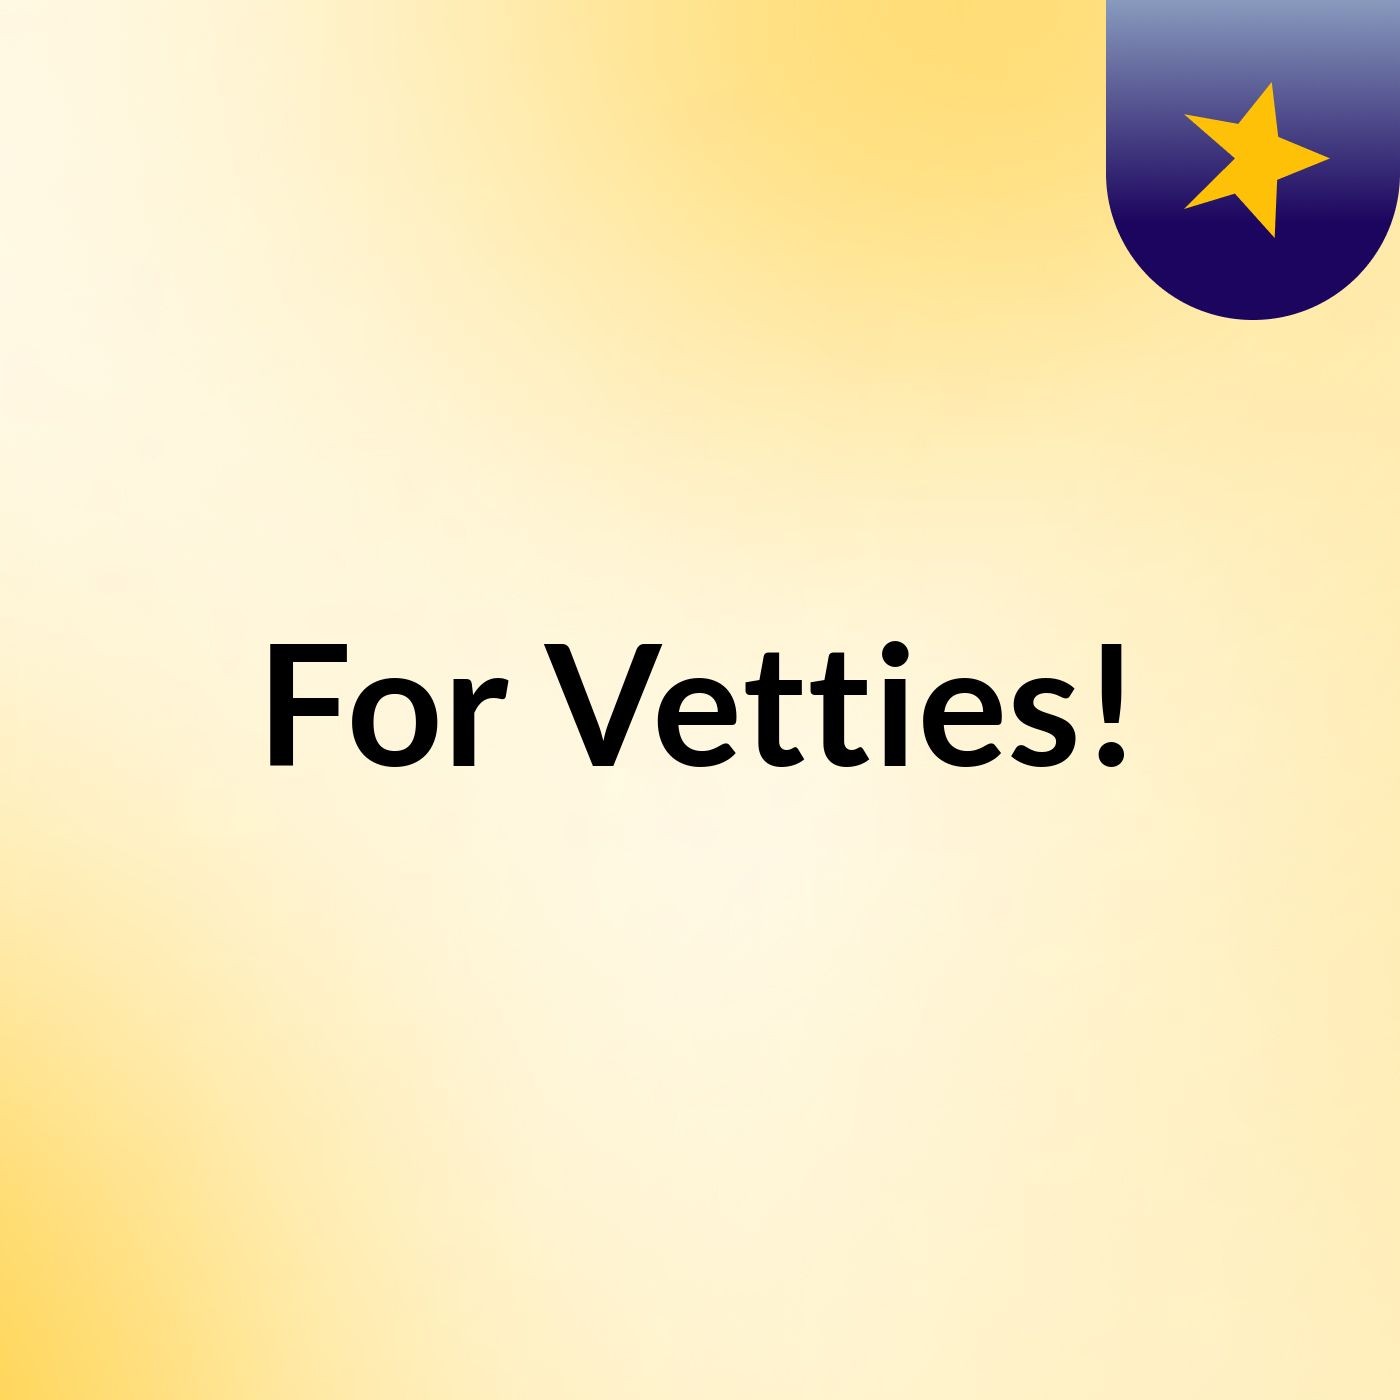 For Vetties!